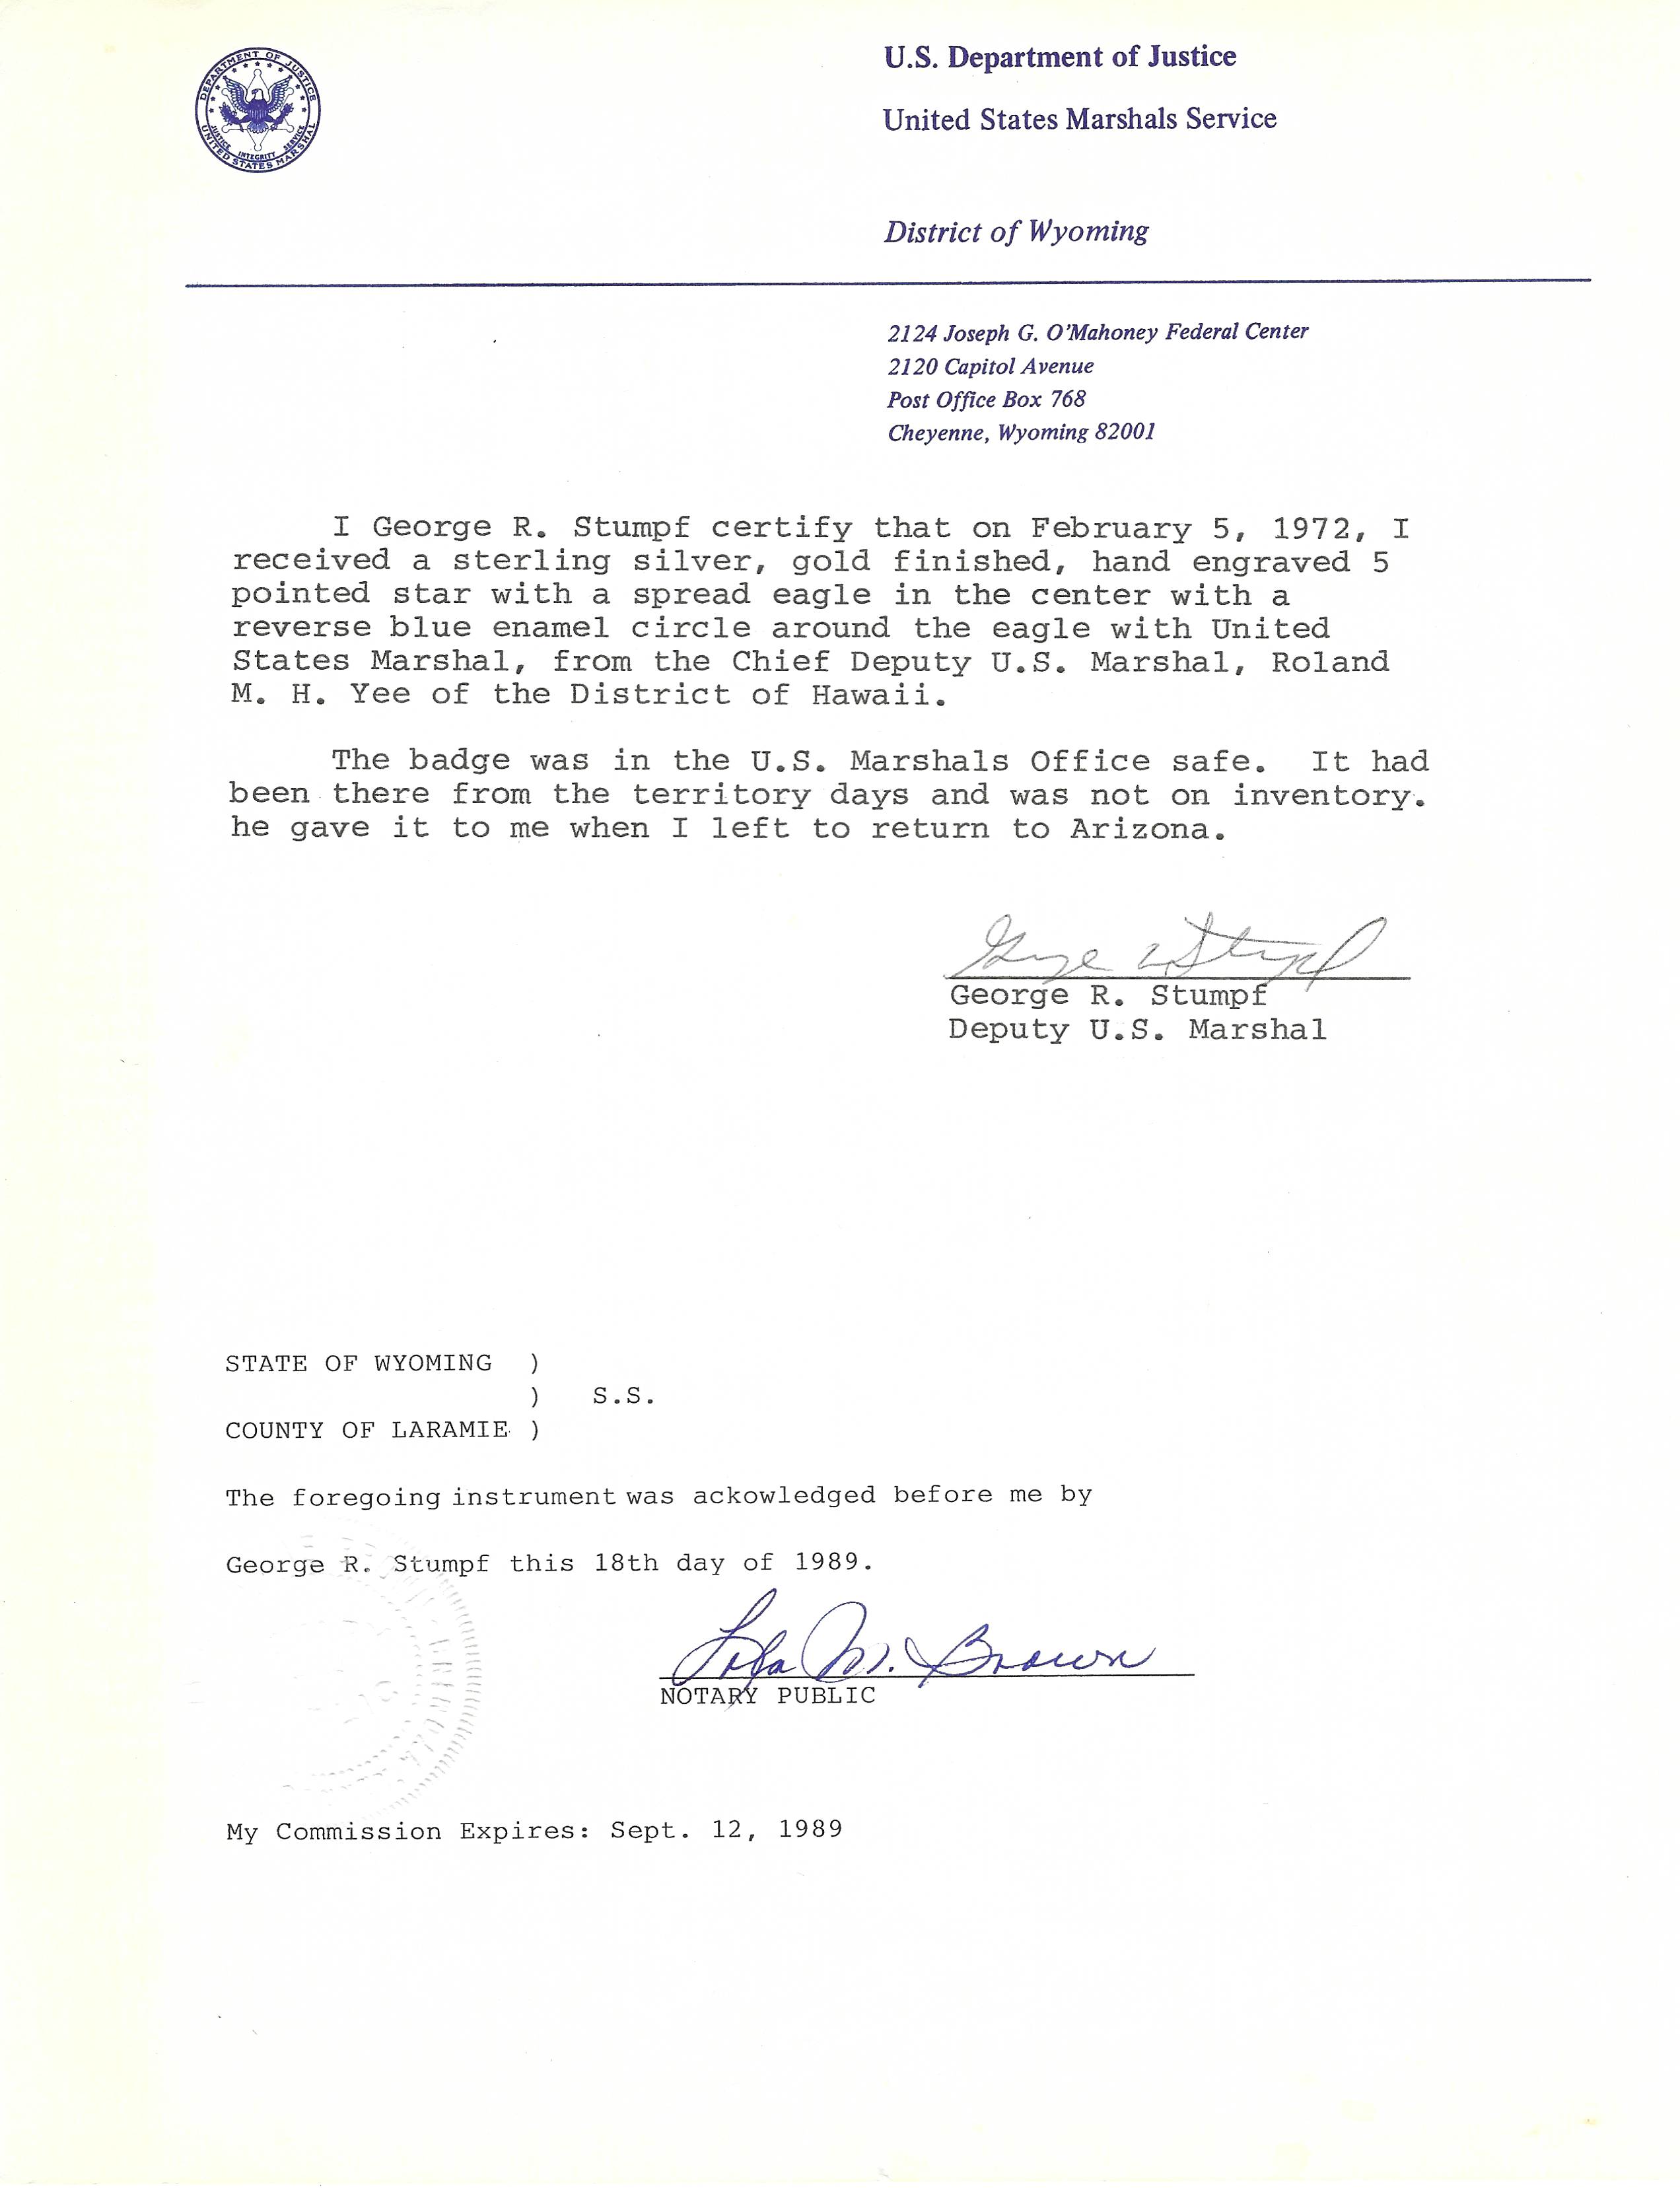 Geo Stumpf notarized letter on U. S. Marshal letterhead  regarding the Hawaiian Island U. S. Marshal badge.